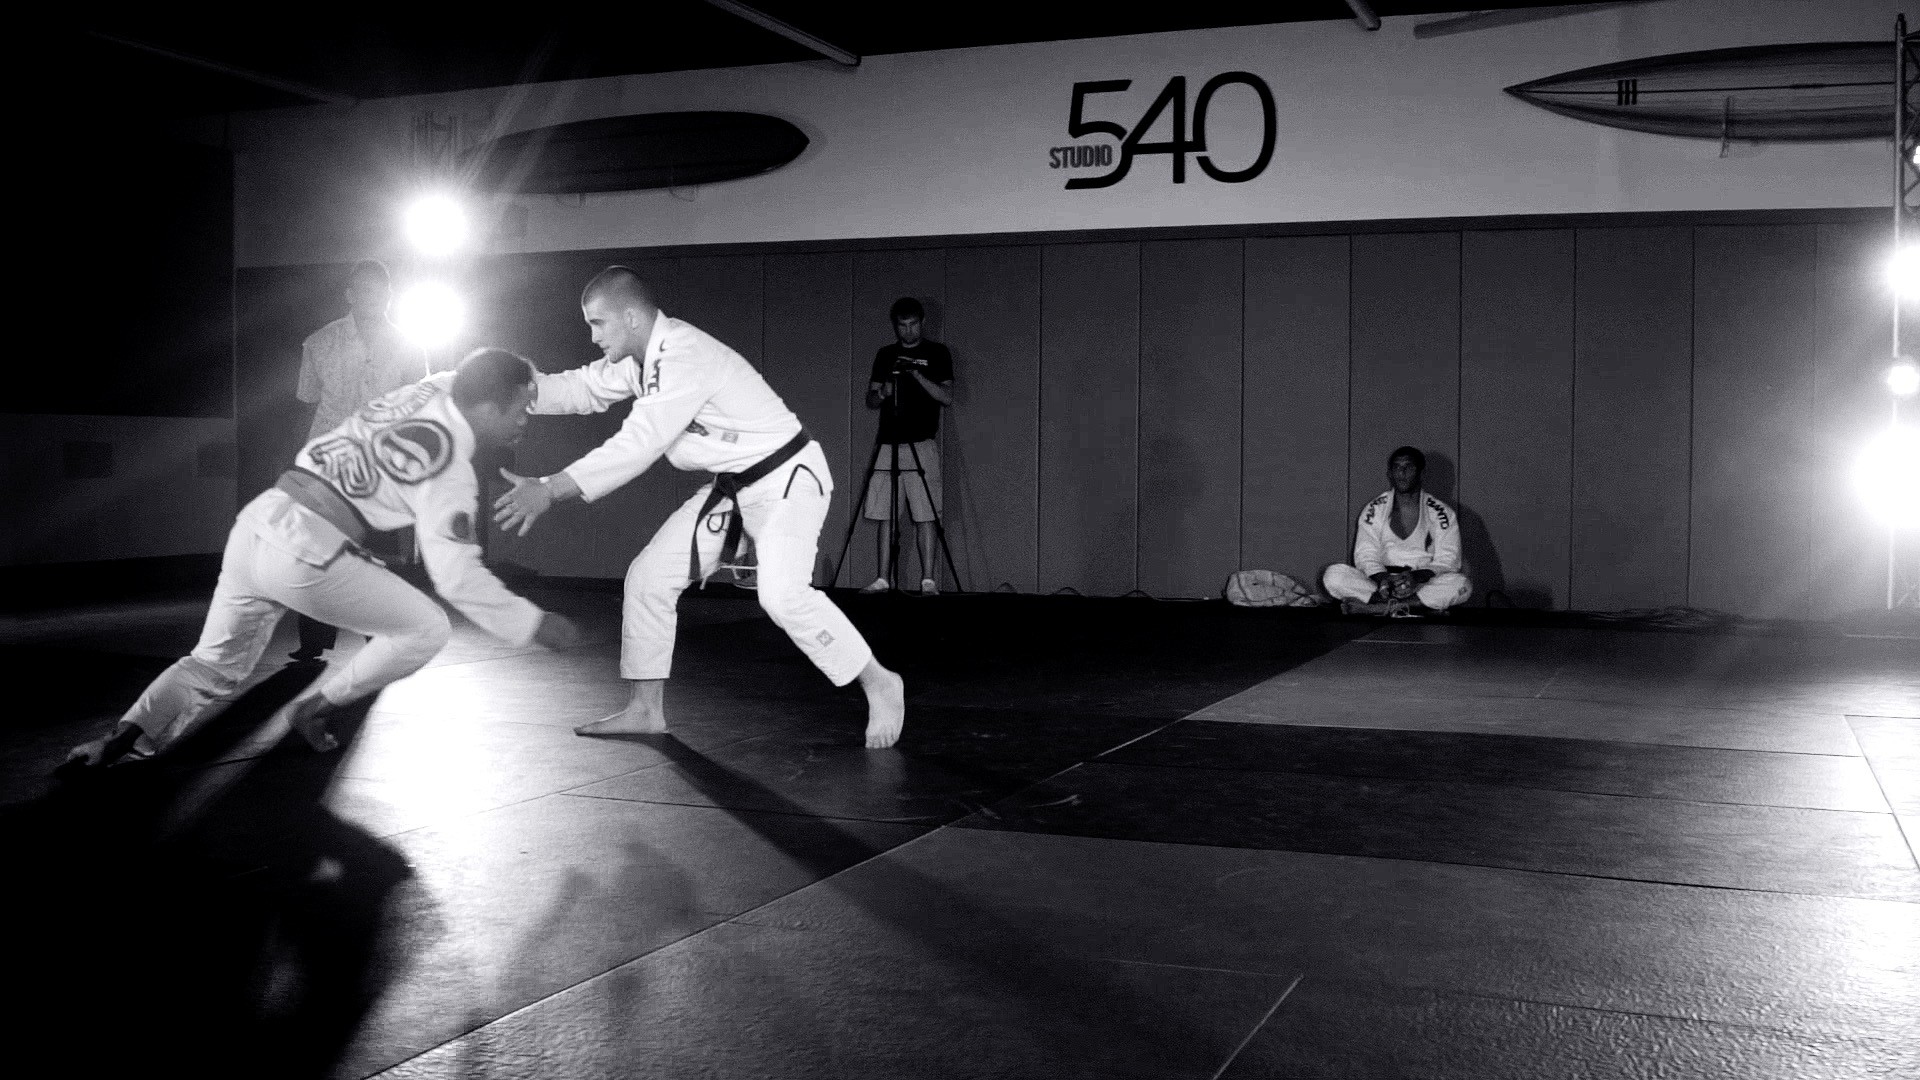 1920x1080 ... Wallpaper HD Source Â· The Royal Invitational An Exclusive New Jiu Jitsu  Competition Is